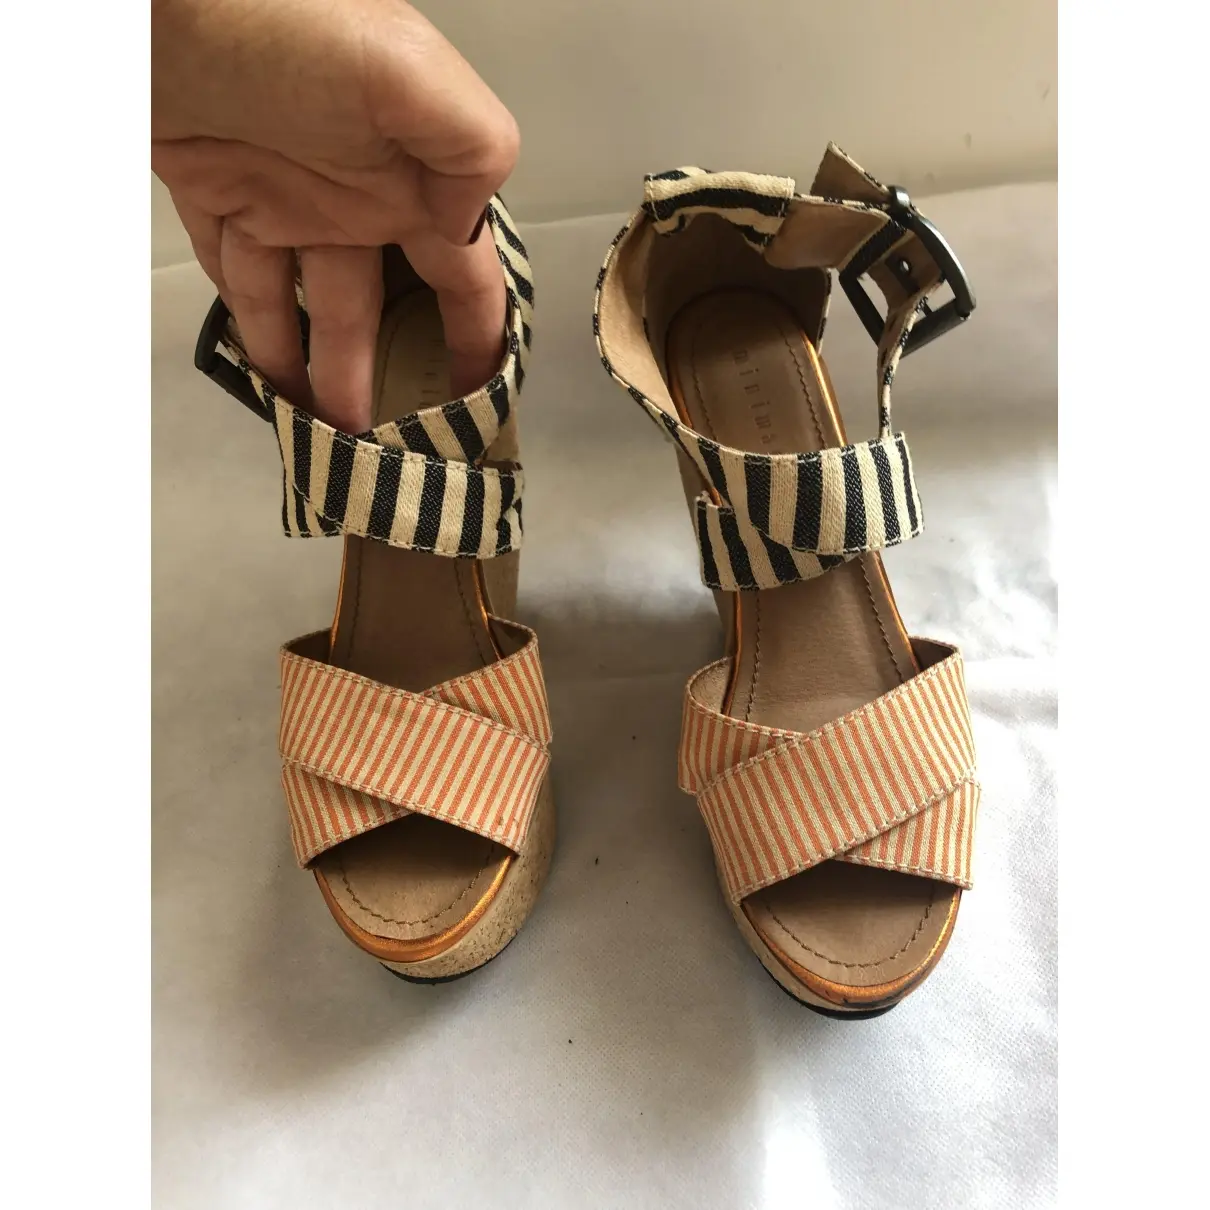 Minimarket Cloth heels for sale